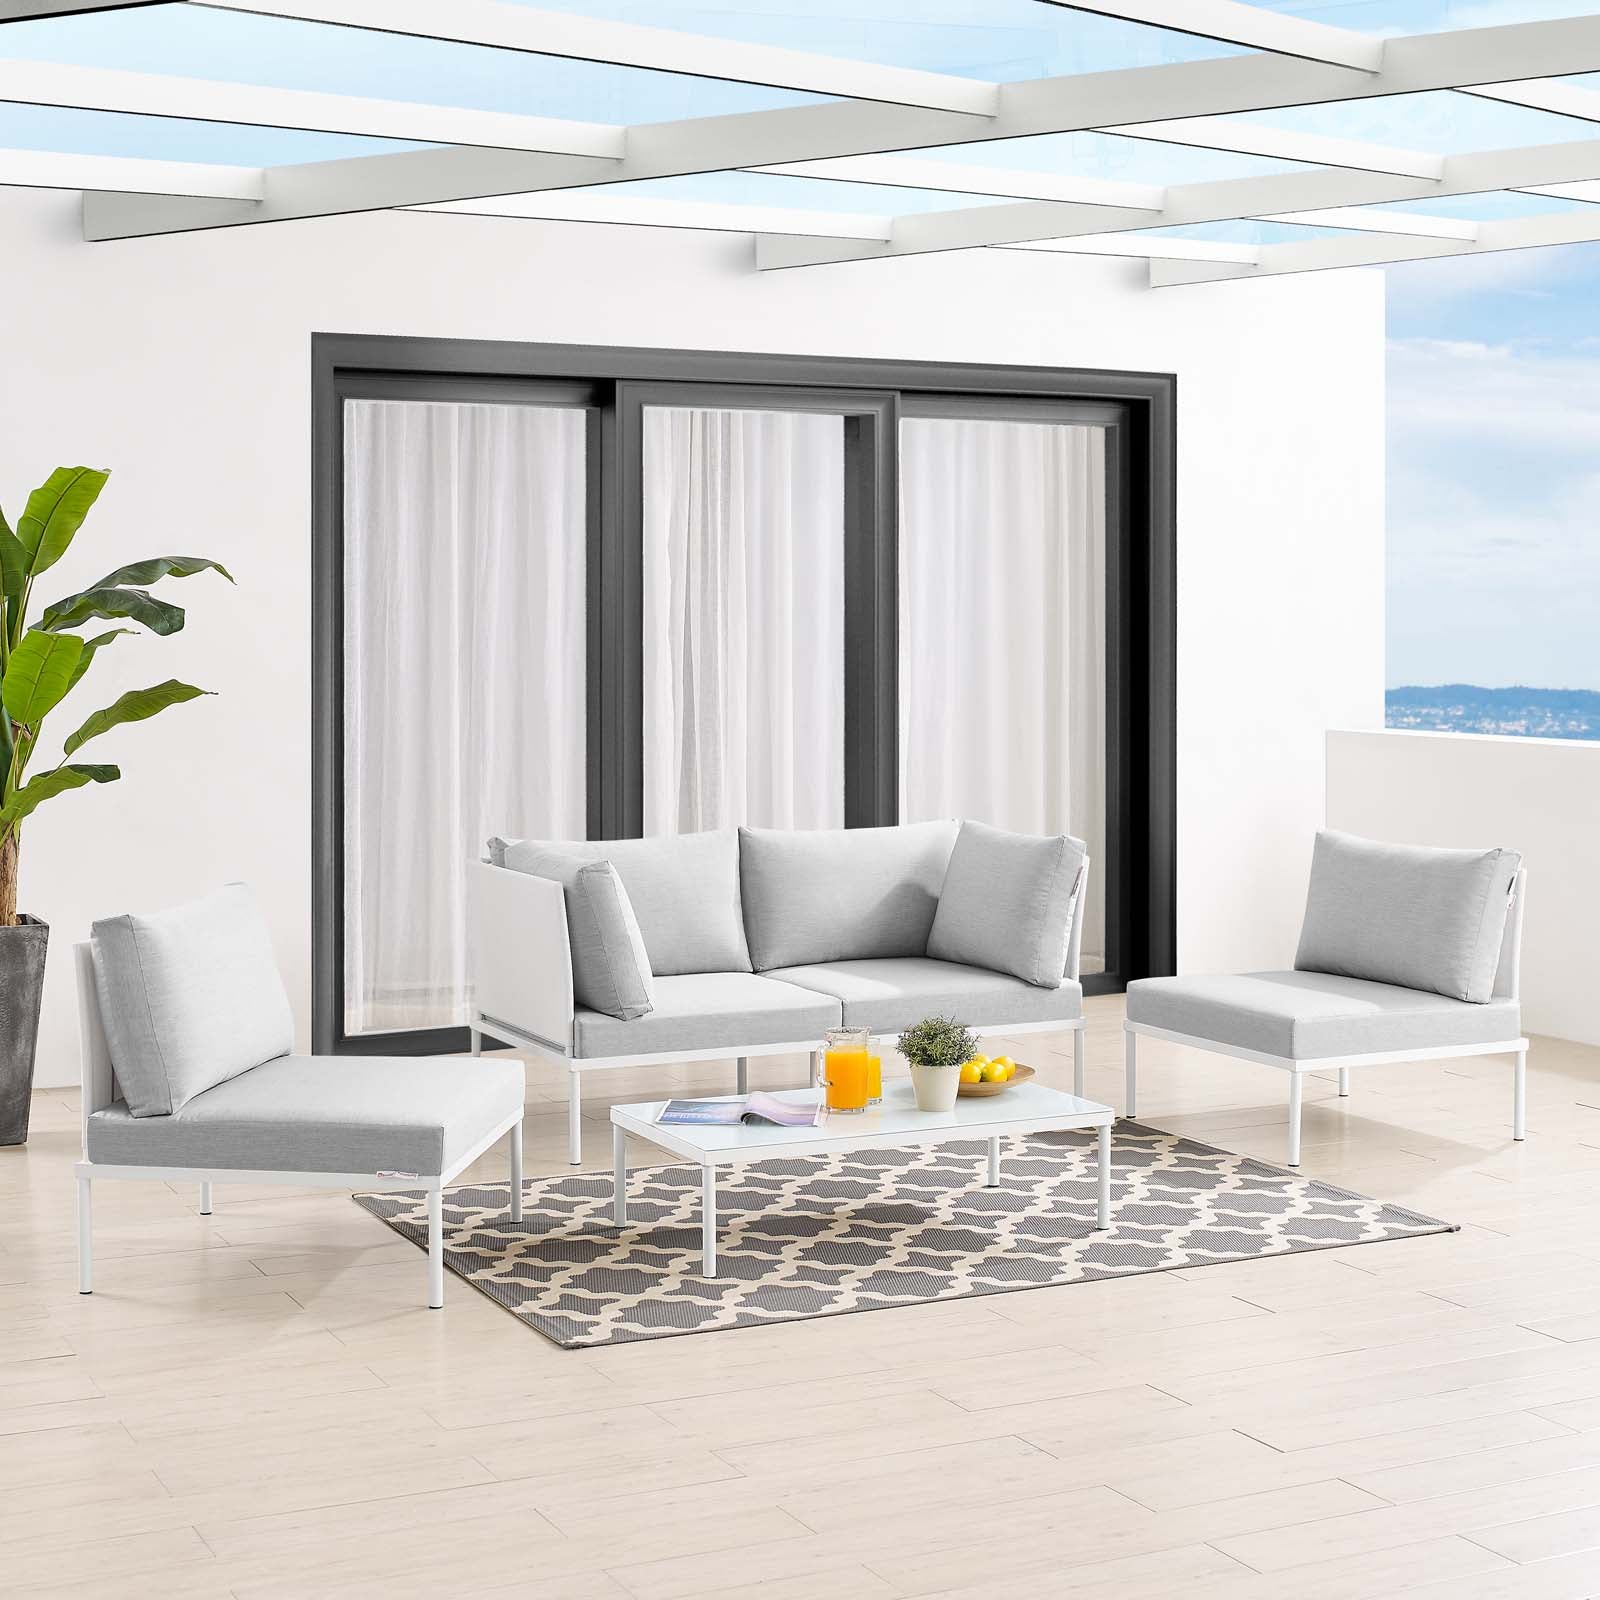 Modway Outdoor Conversation Sets - Harmony 4 Piece Sunbrella Outdoor Patio Aluminum Seating Set White Gray